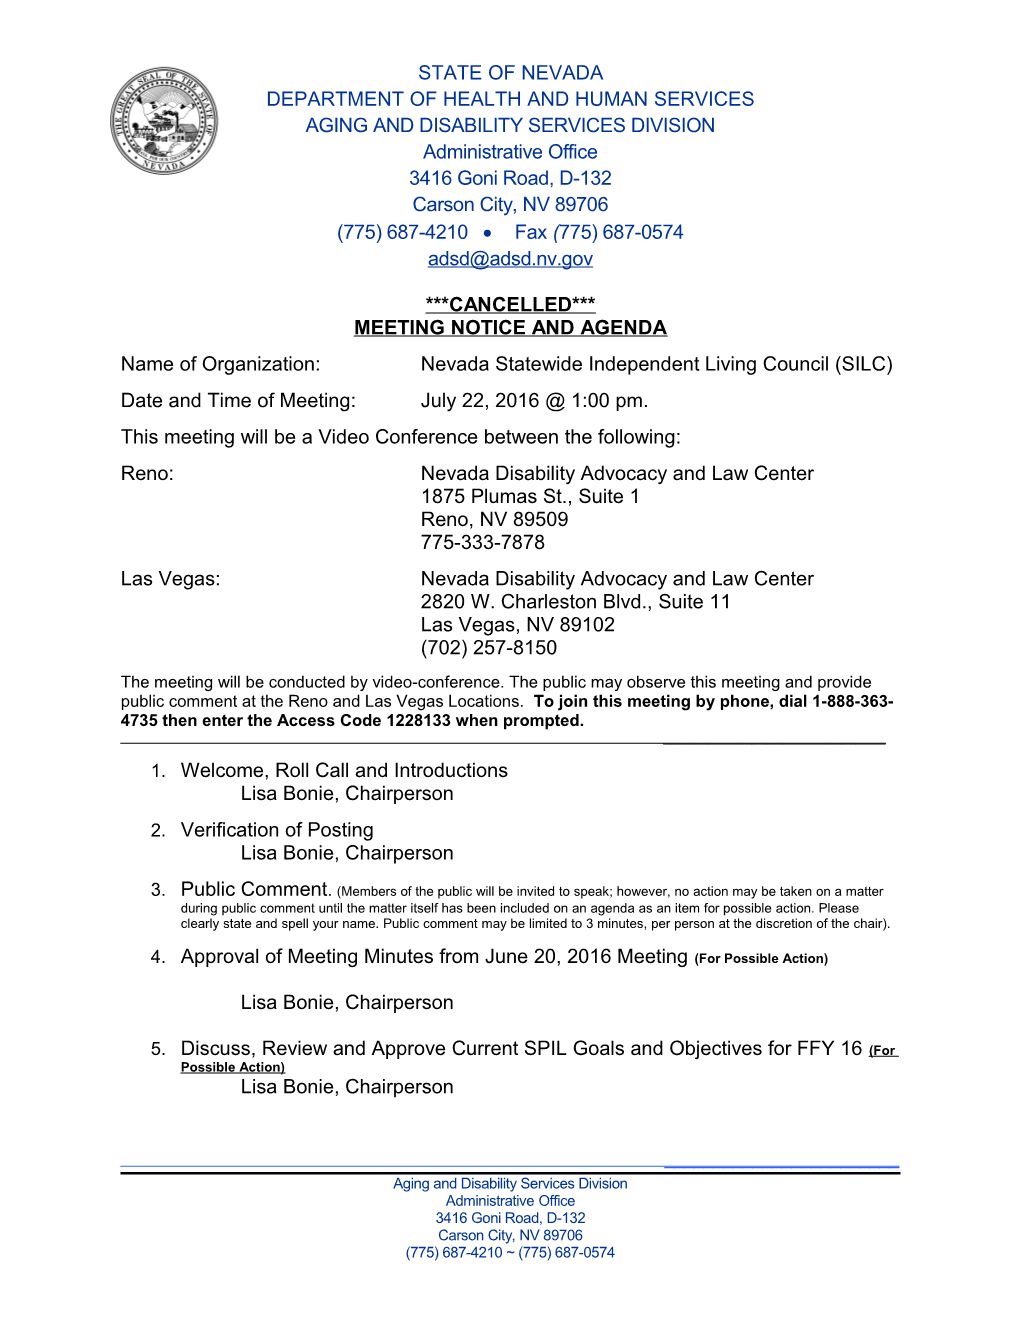 Meeting Notice and Agenda s5